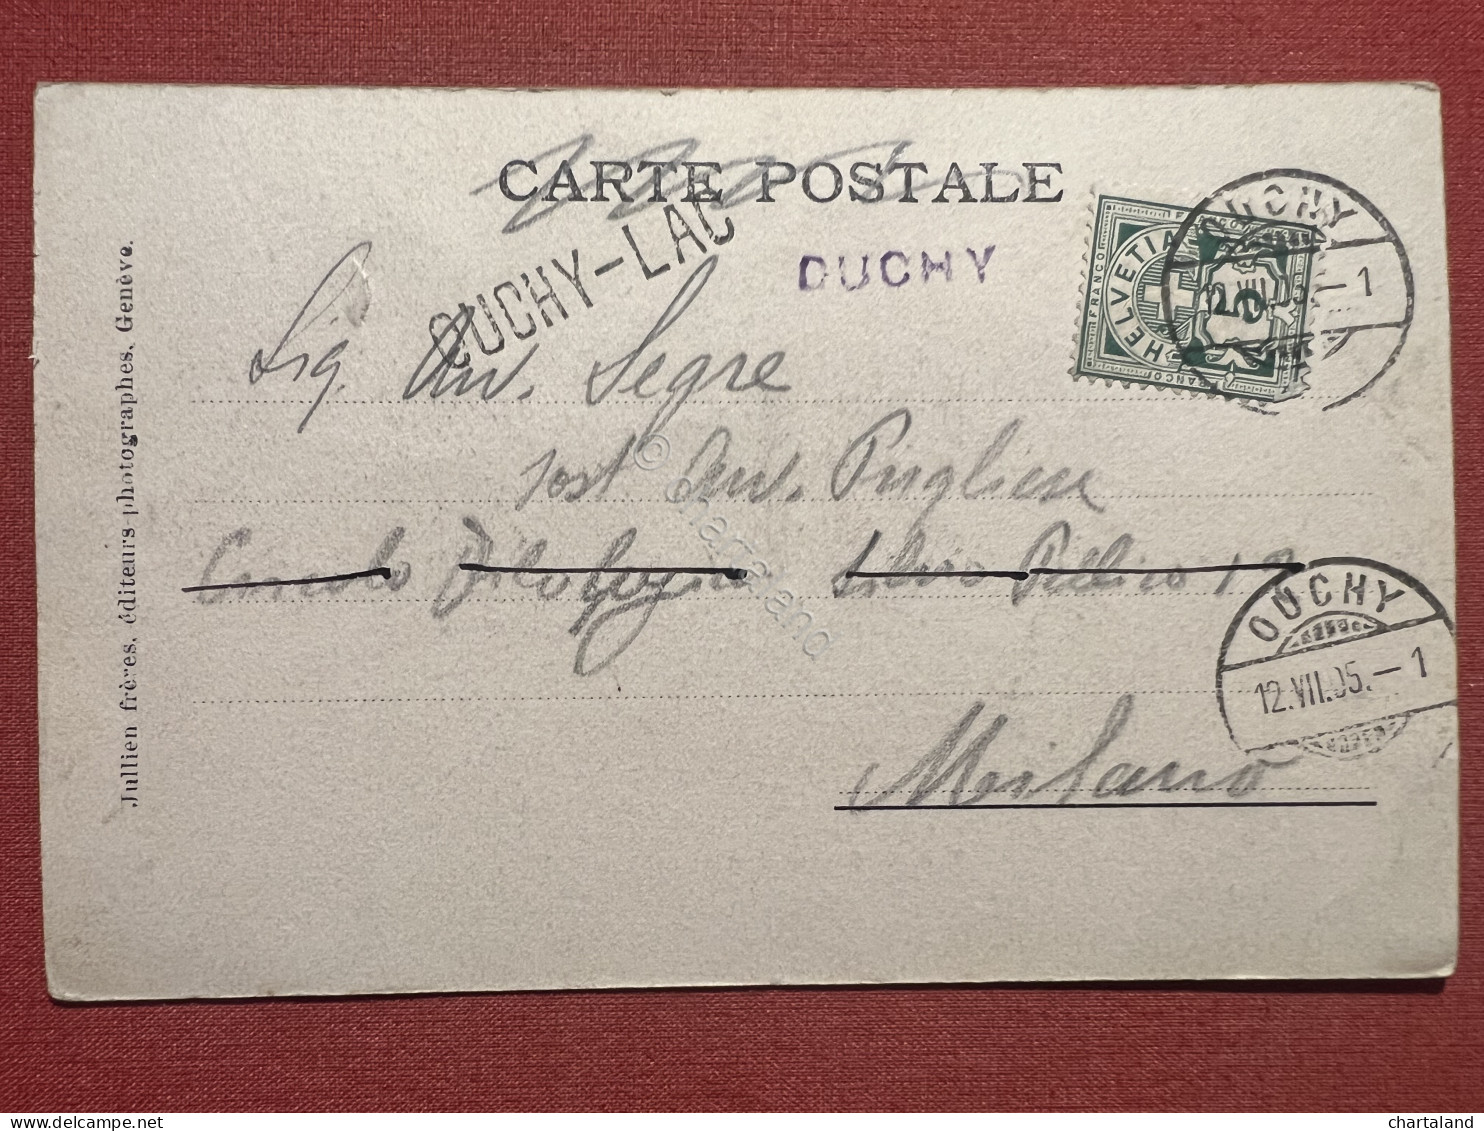 Cartolina - Switzerland - Genève Et Le Mont-Blanc - 1905 - Ohne Zuordnung